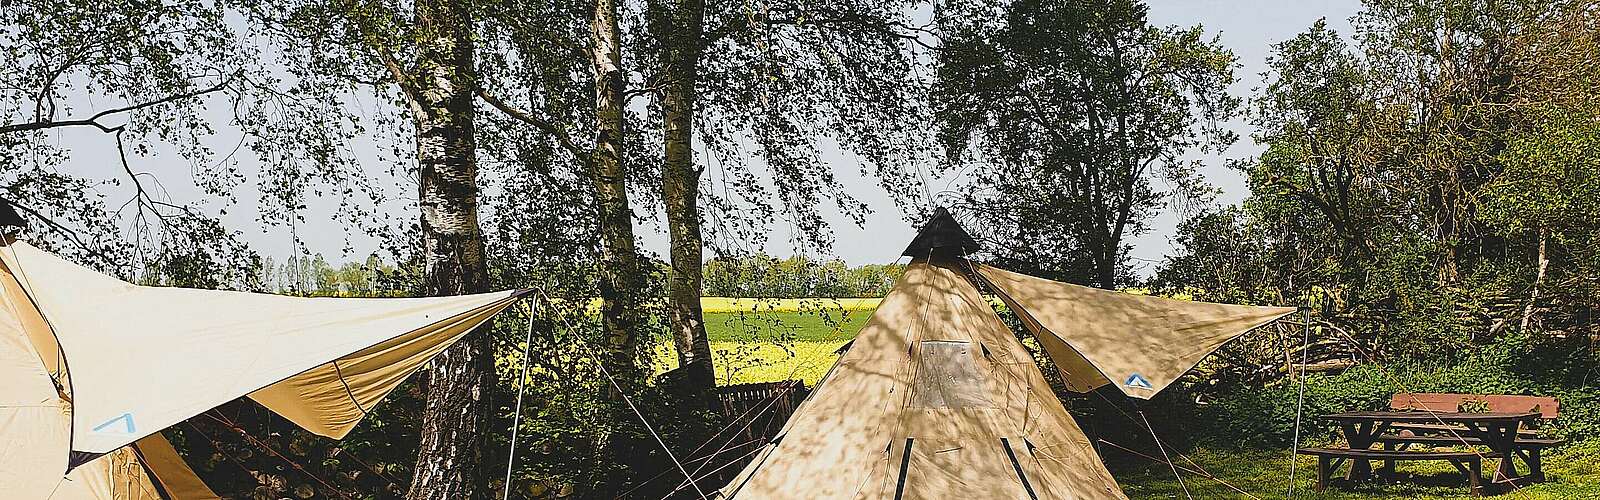 Zelte vor Rapsfeld in Oehna,
        
    

        Foto: Flaeming Camping Oehna/Kein Urheber bekannt